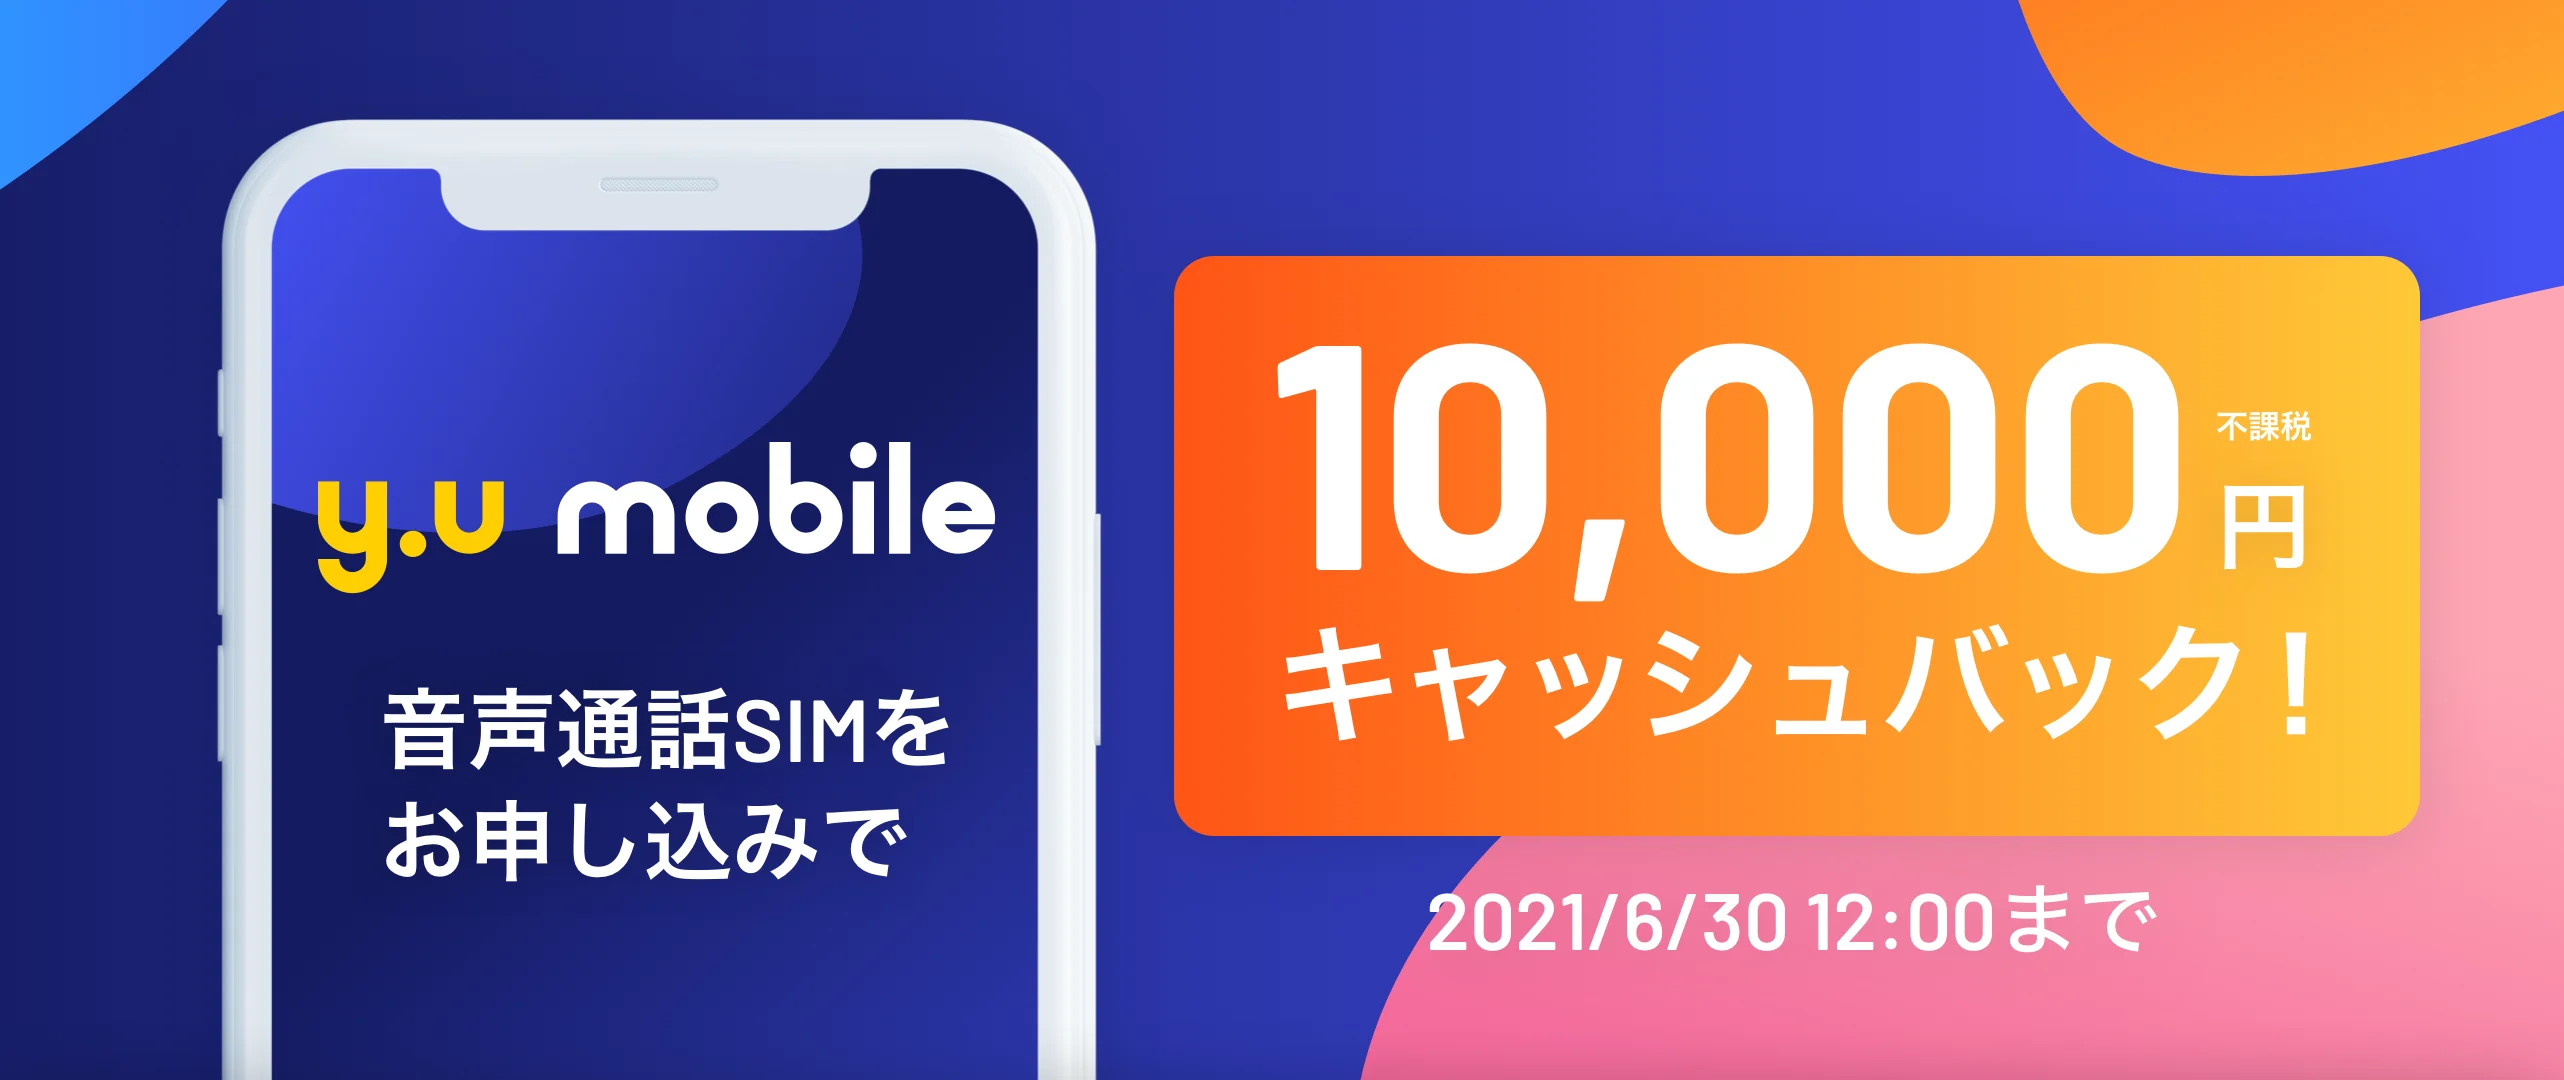 y.u mobile10,000円キャッシュバックキャンペーン